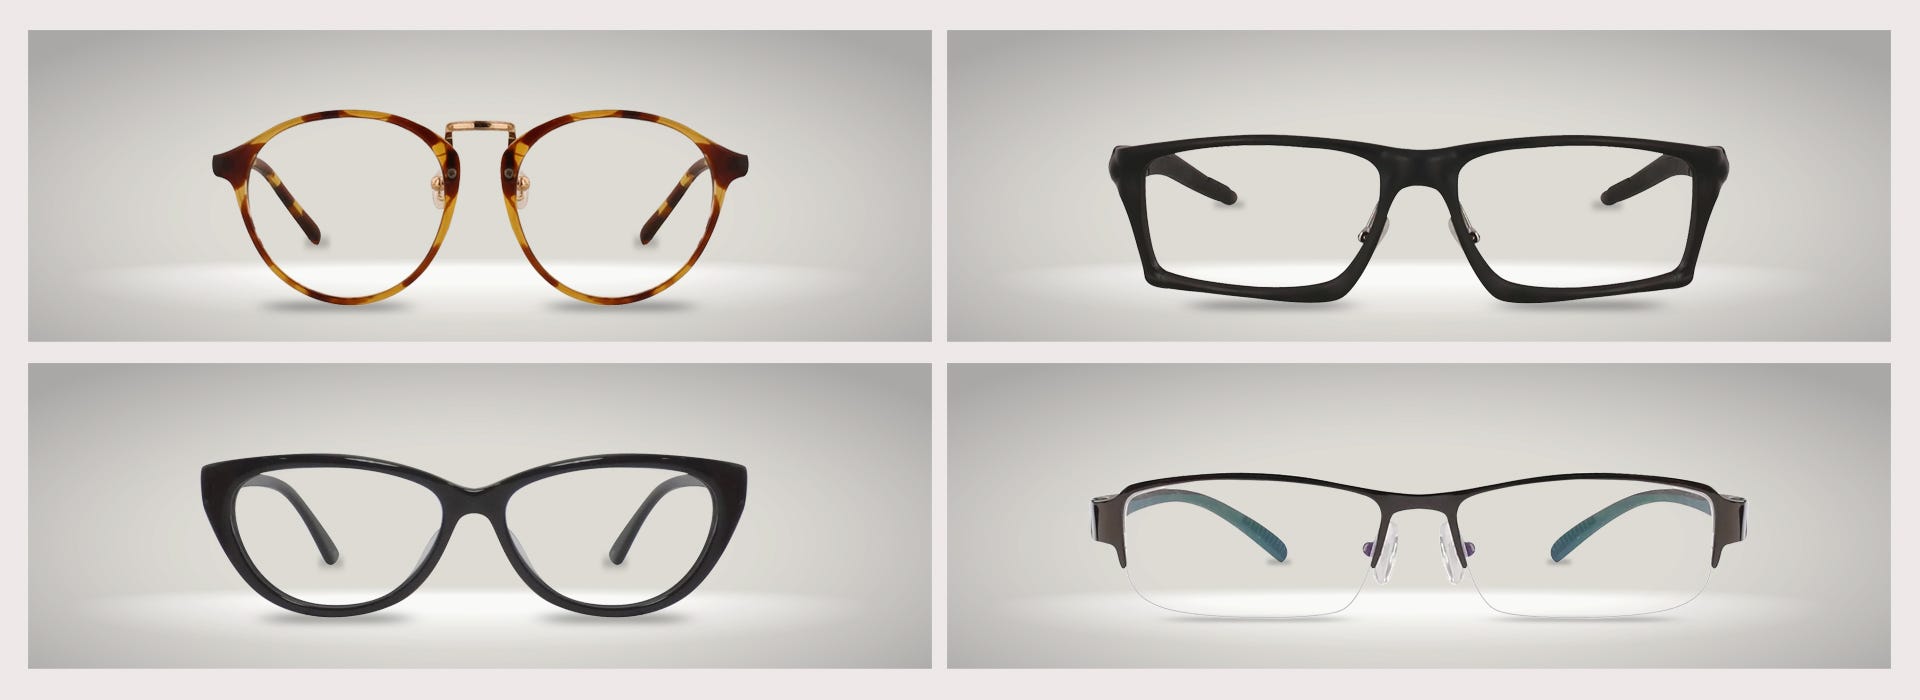 prescription eyeglasses online cheap prescription glasses designer